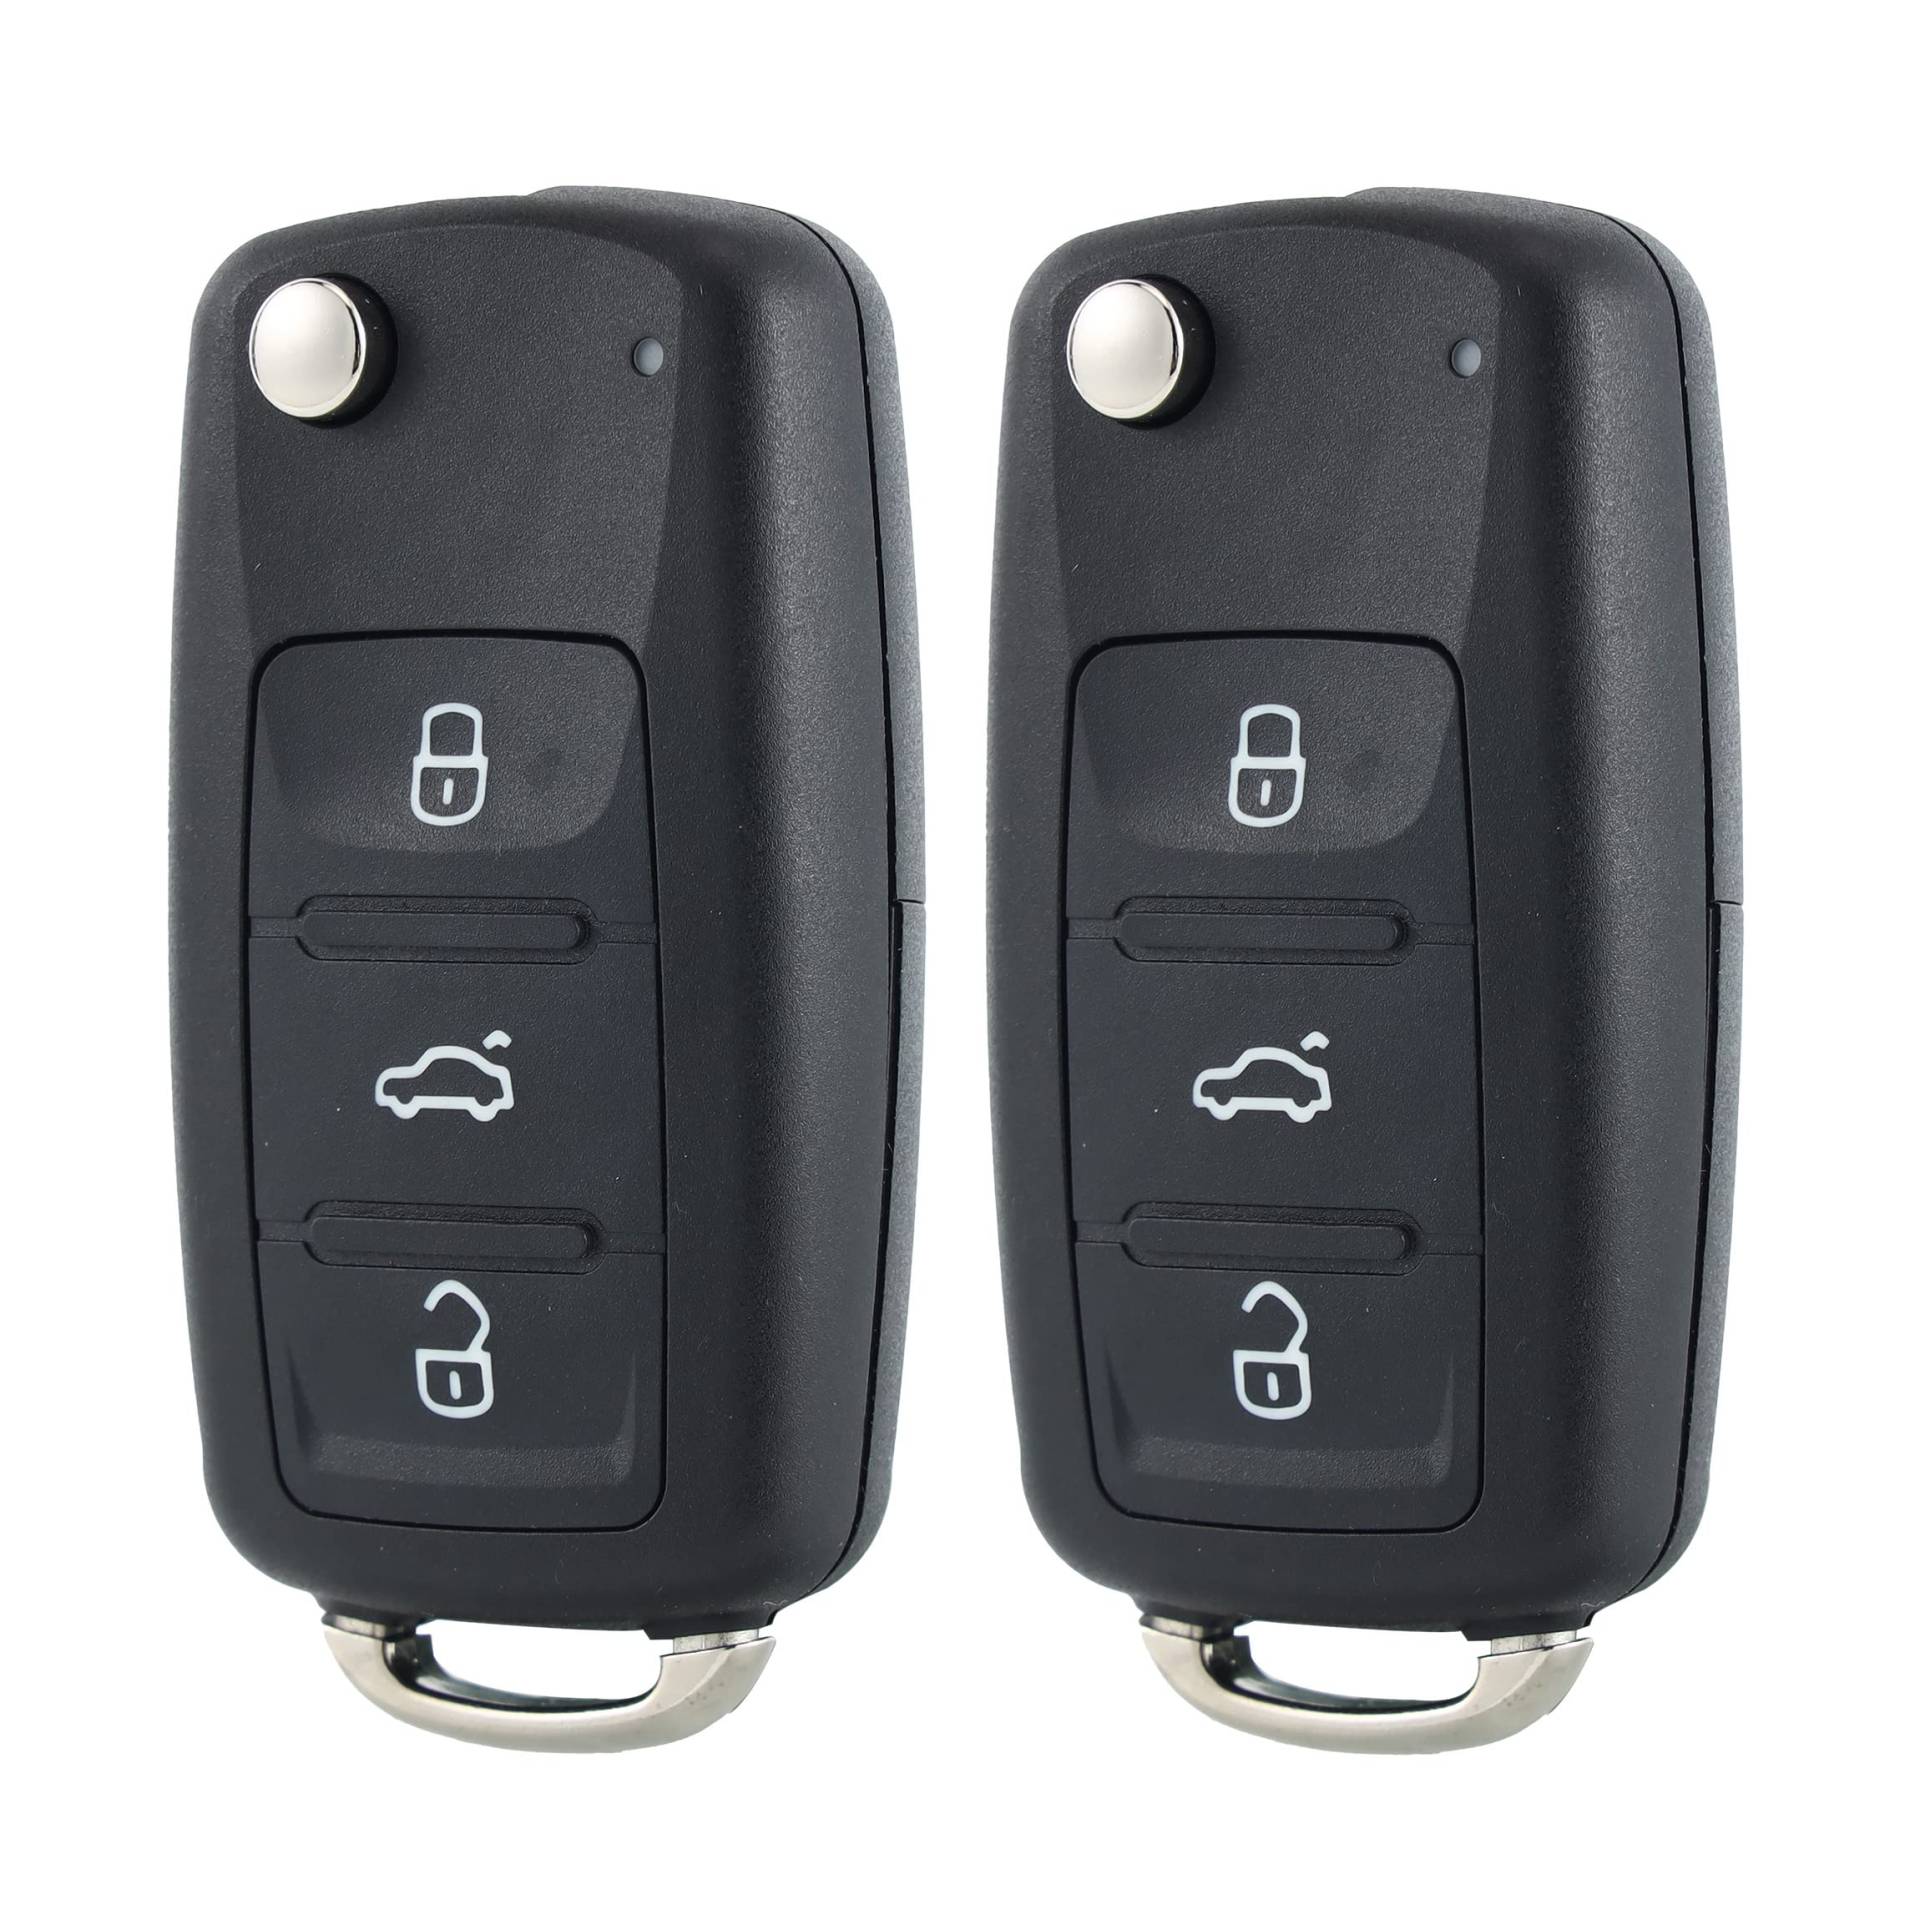 2er set 3-Taste Ersatz-Klapp-Autoschlüsselgehäuse Funkschlüssel Schlüssel kompatibel für VW,Betterher kompatibel für skoda schlüssel Volkswagen Golf Mk6 T1guan Polo Passat CC SEAT Octavia von Betterher